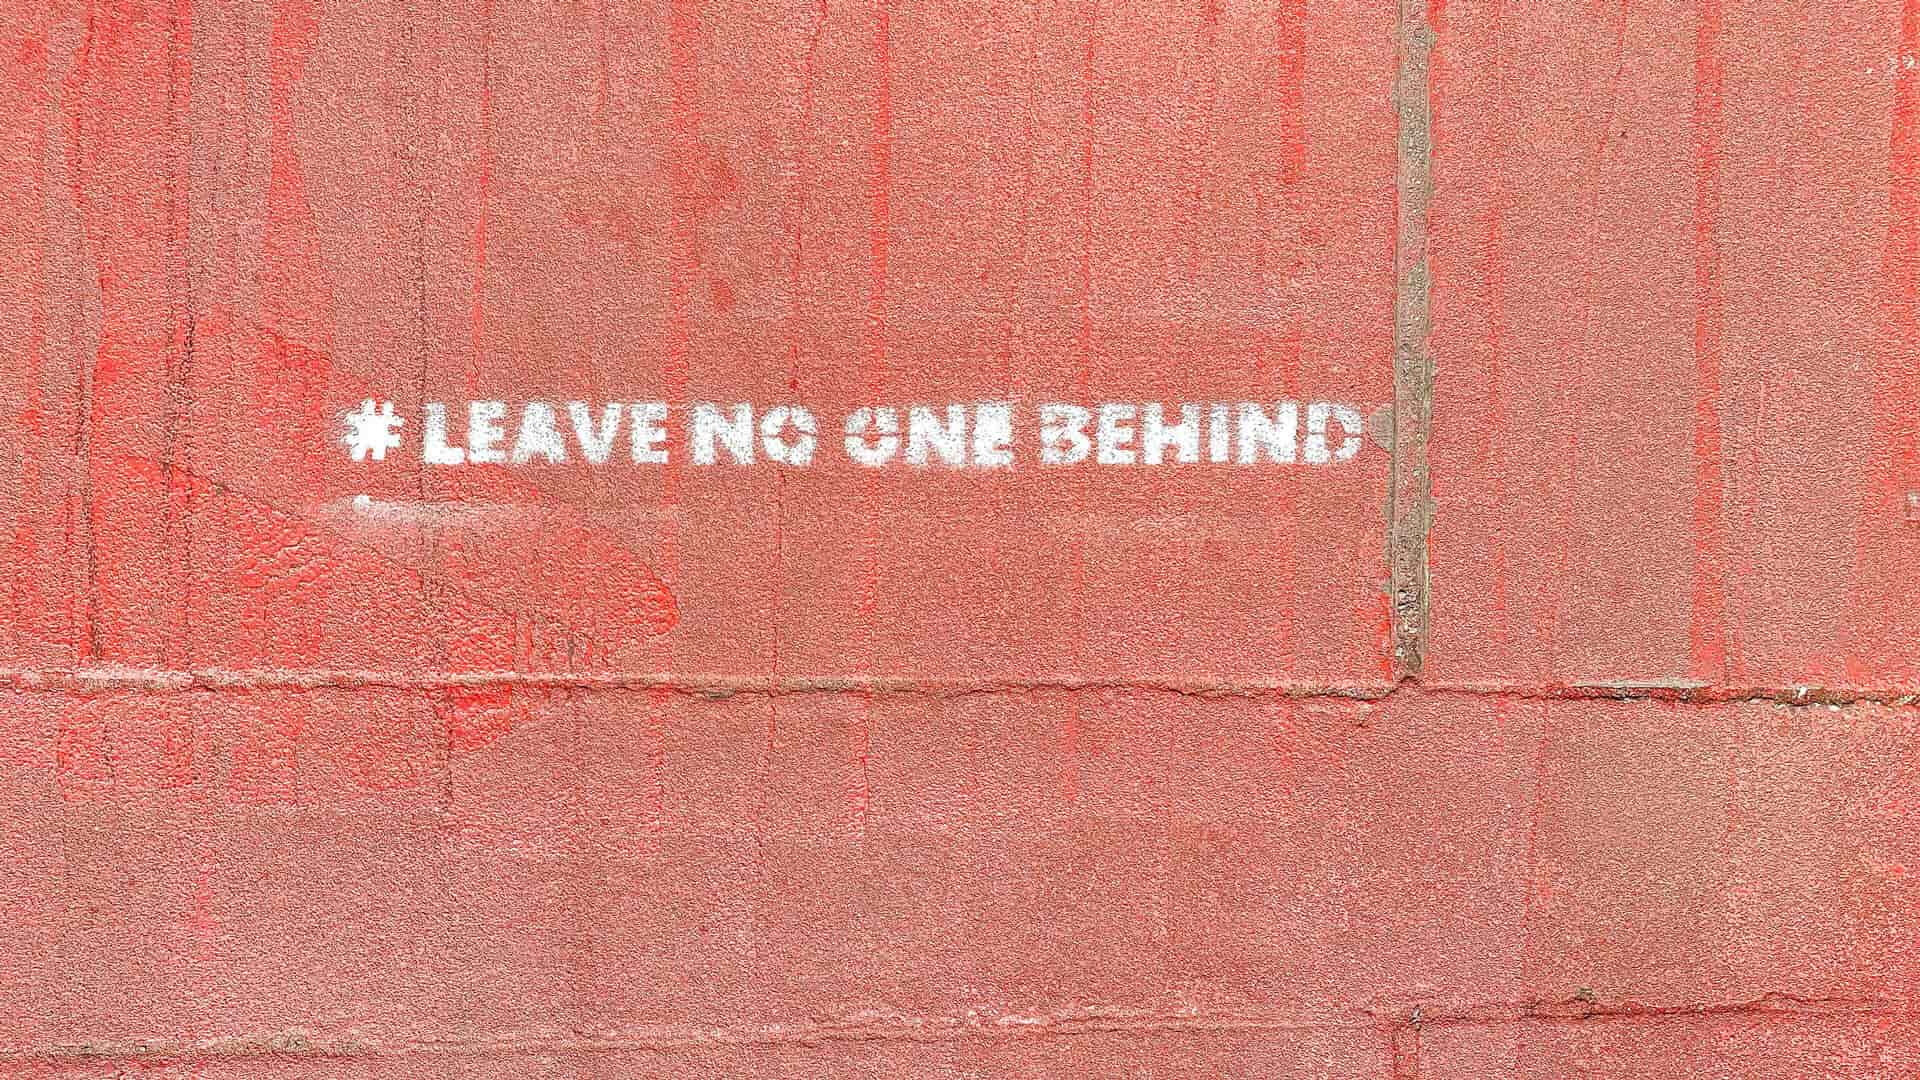 frase "leave no one behind" escrita em parede